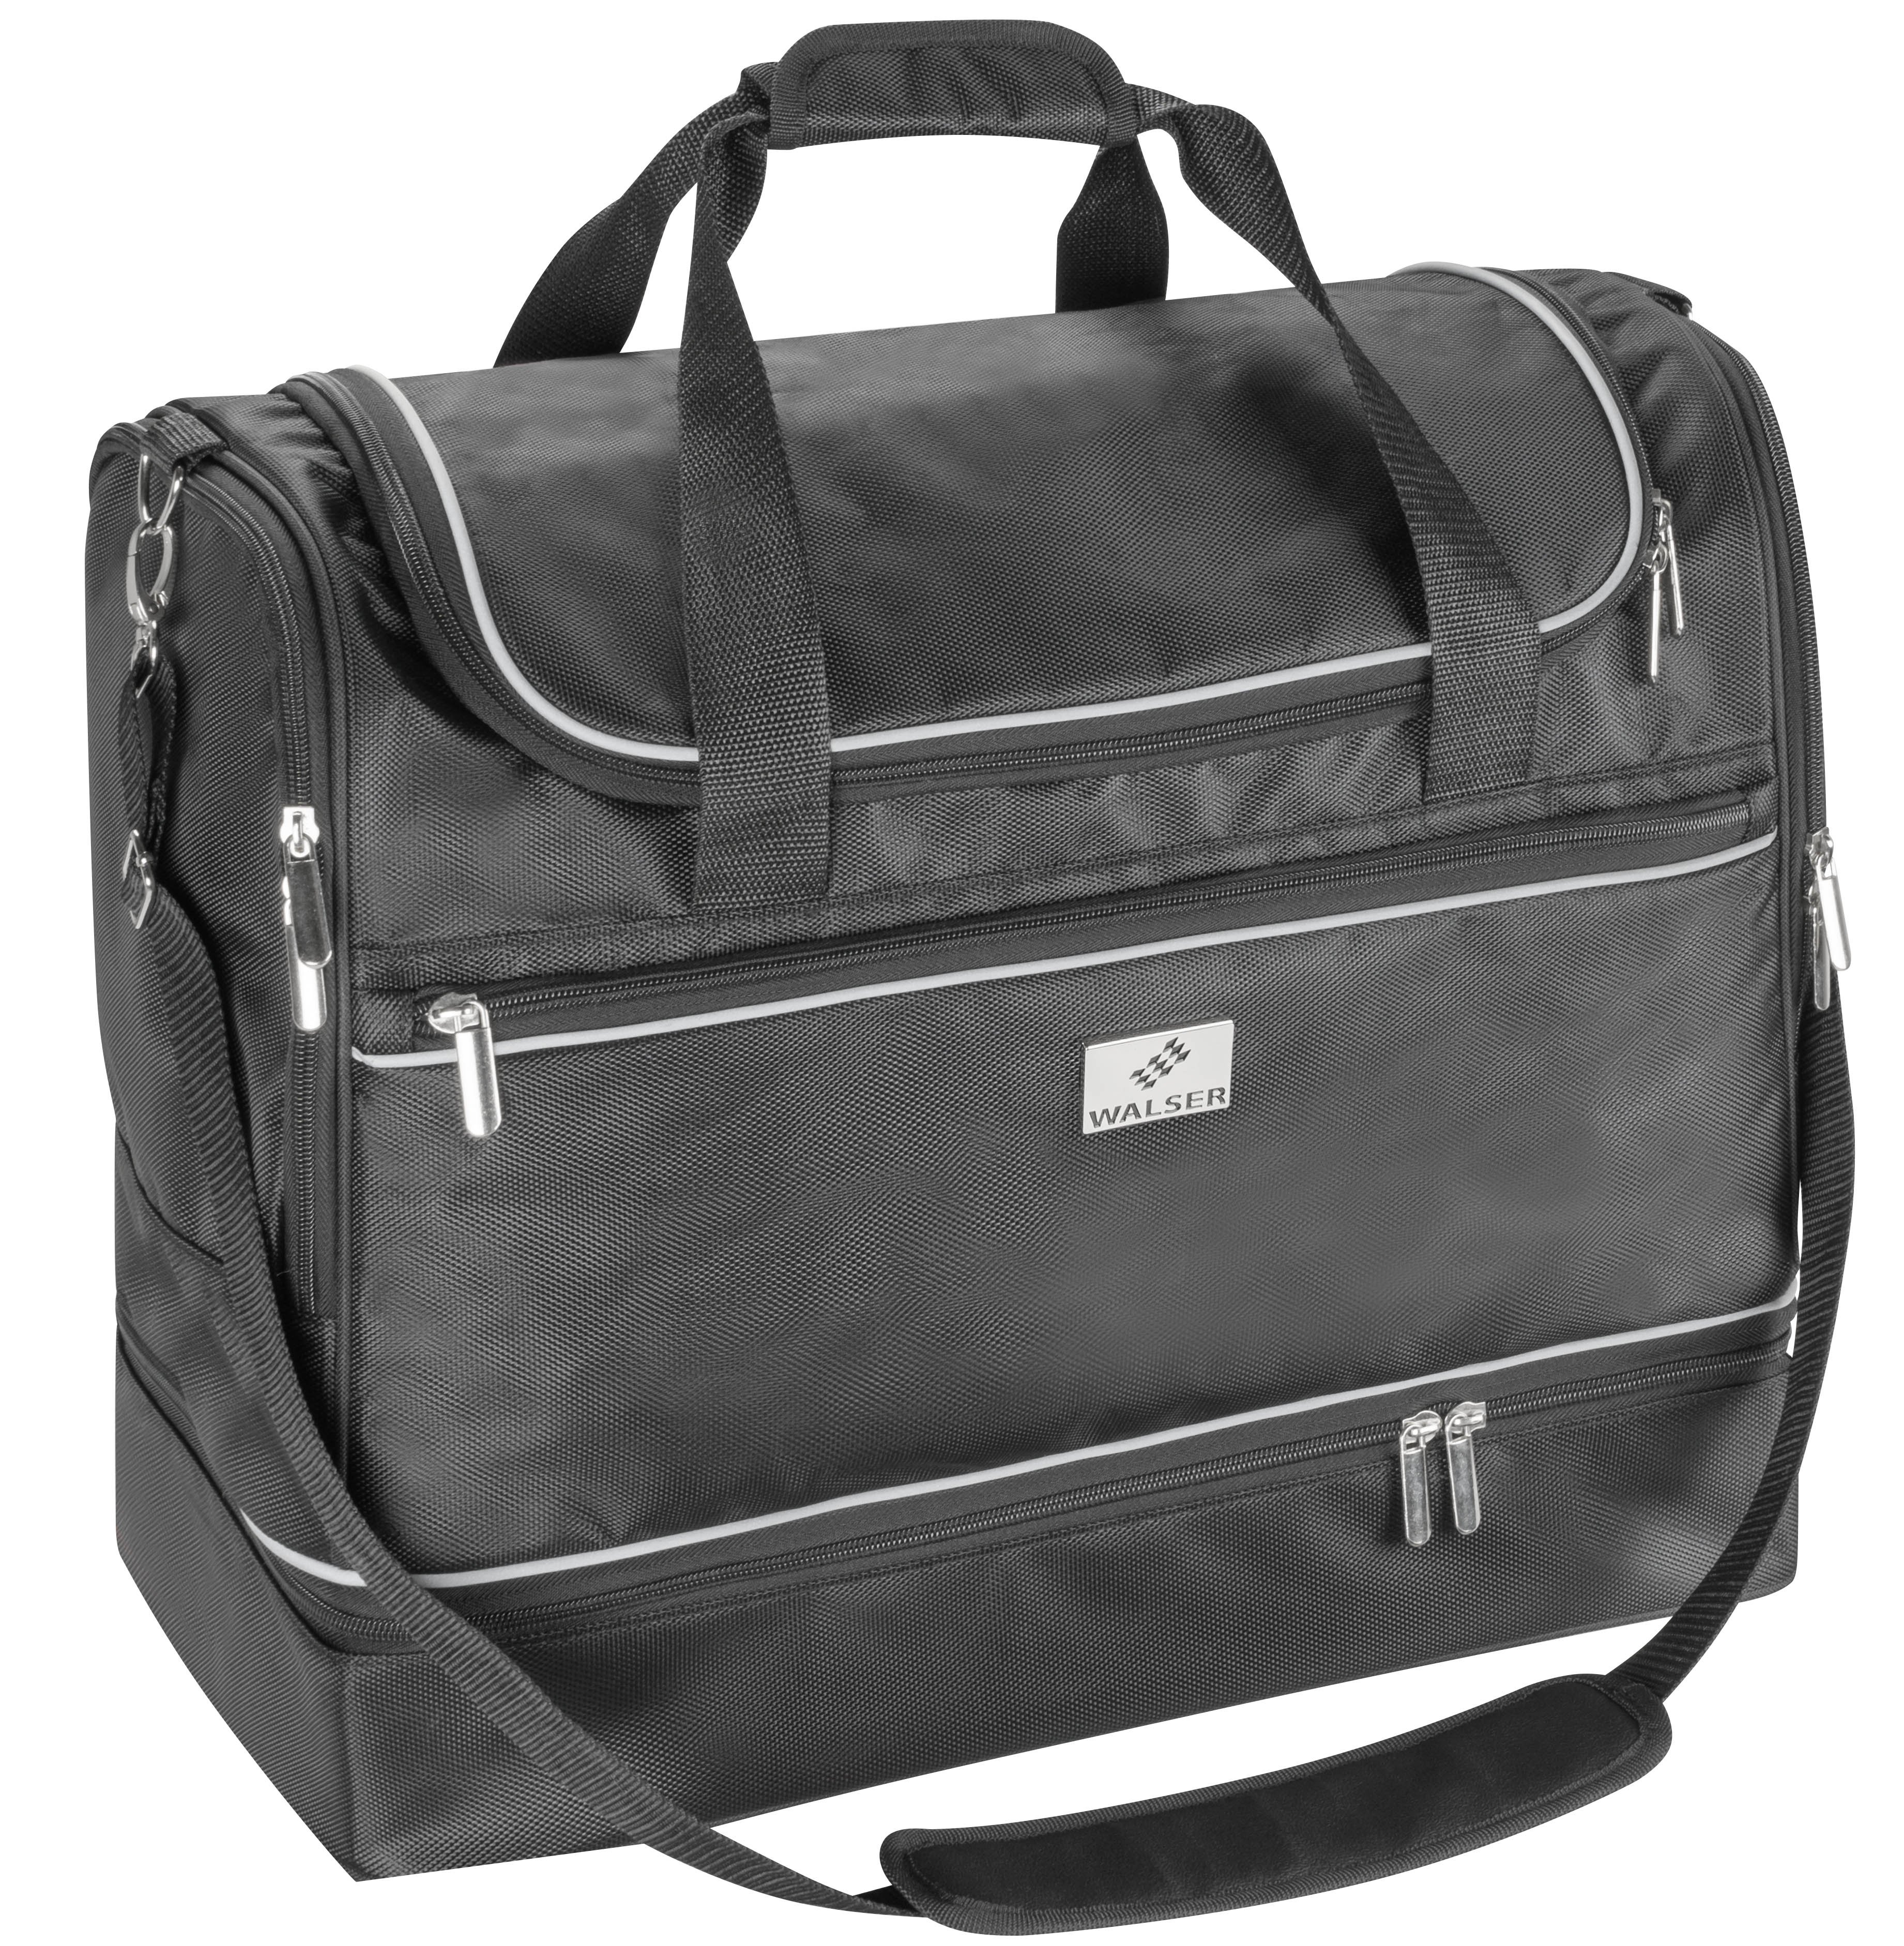 Carbags sports bag 40x30x45cm black